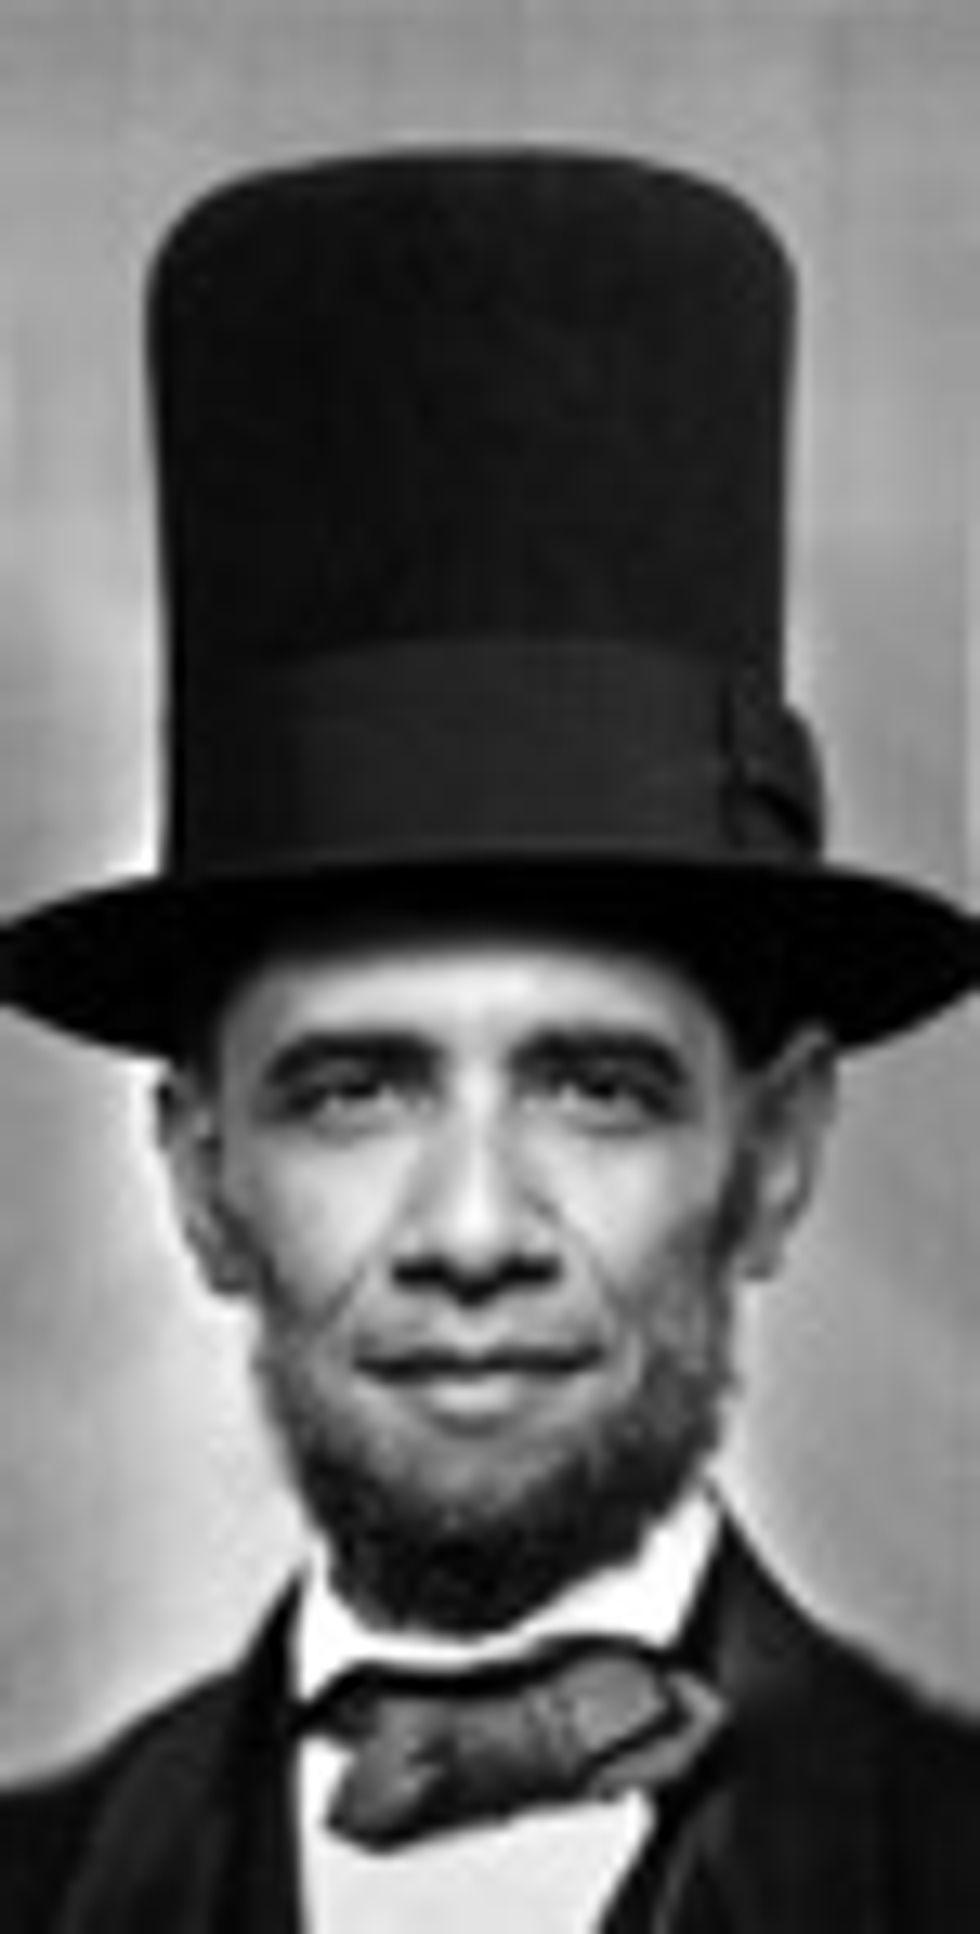 Liveblogging Barack Obama's Government Procurement Responsibility Speech